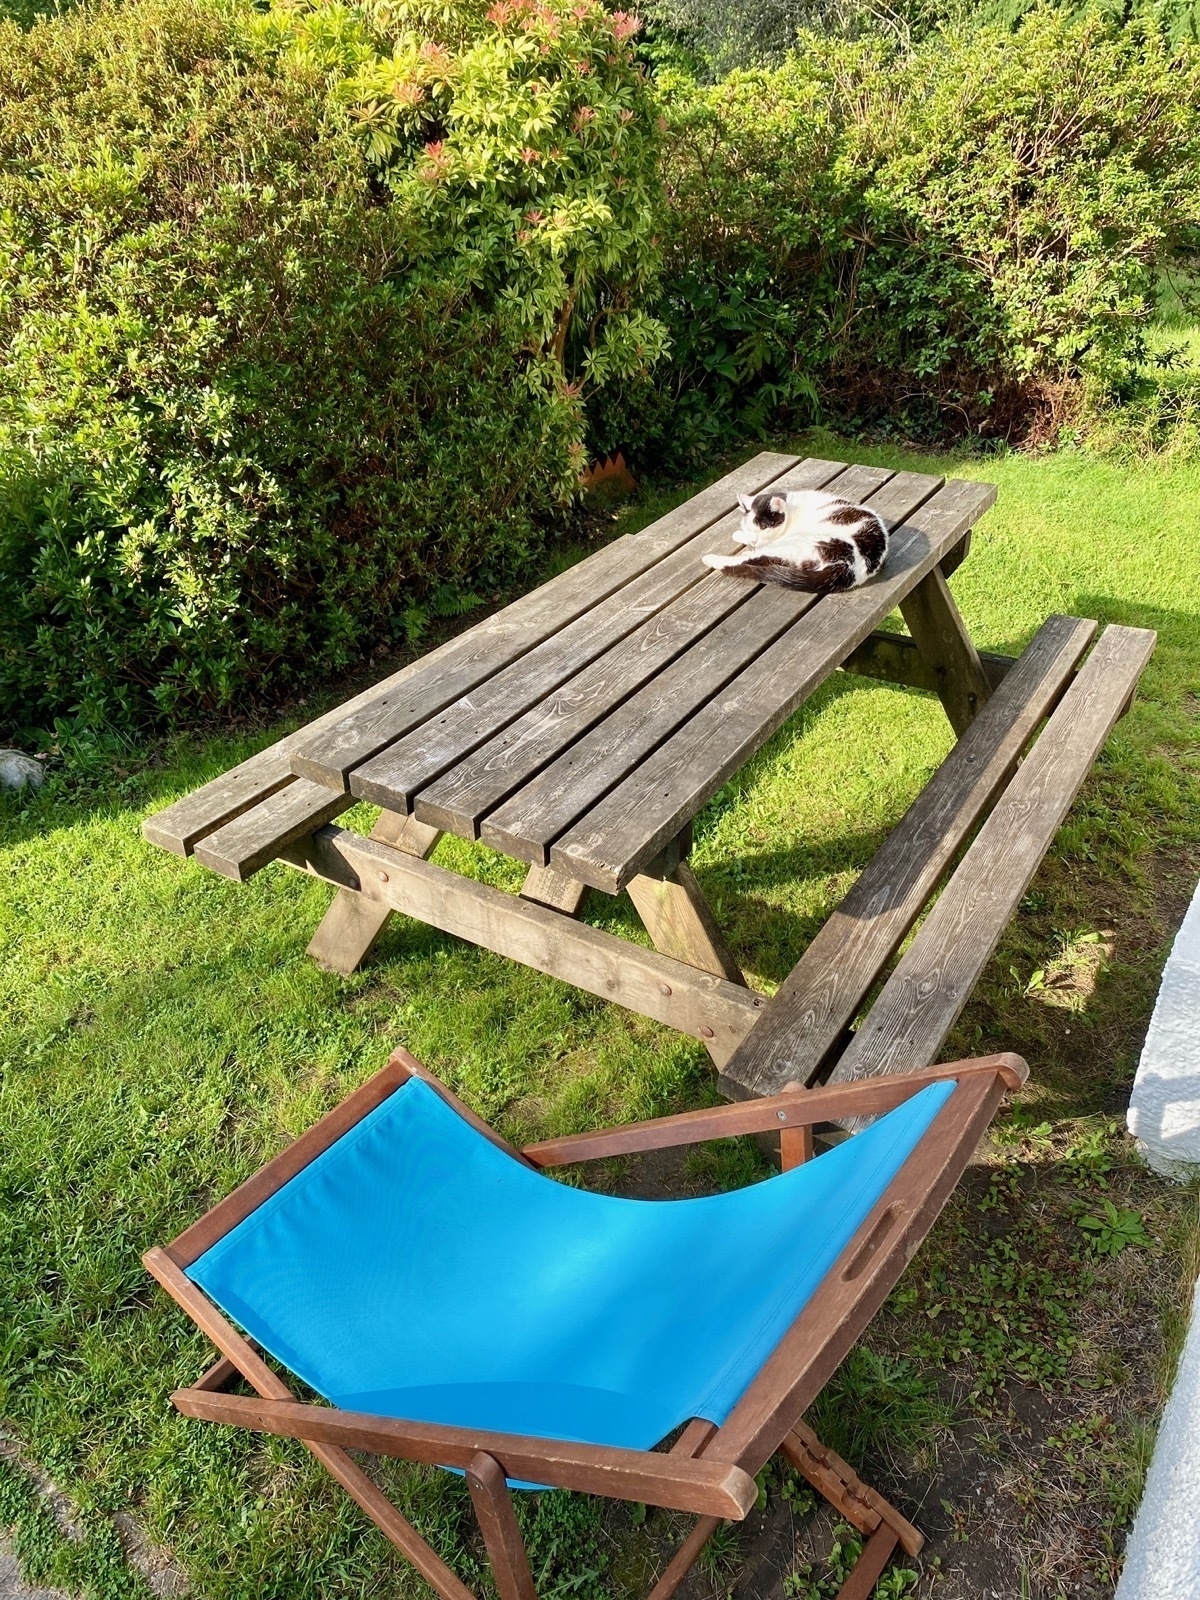 Early morning garden scene, sun shining on a cat sleeping on a wooden picnic bench next to a blue deckchair